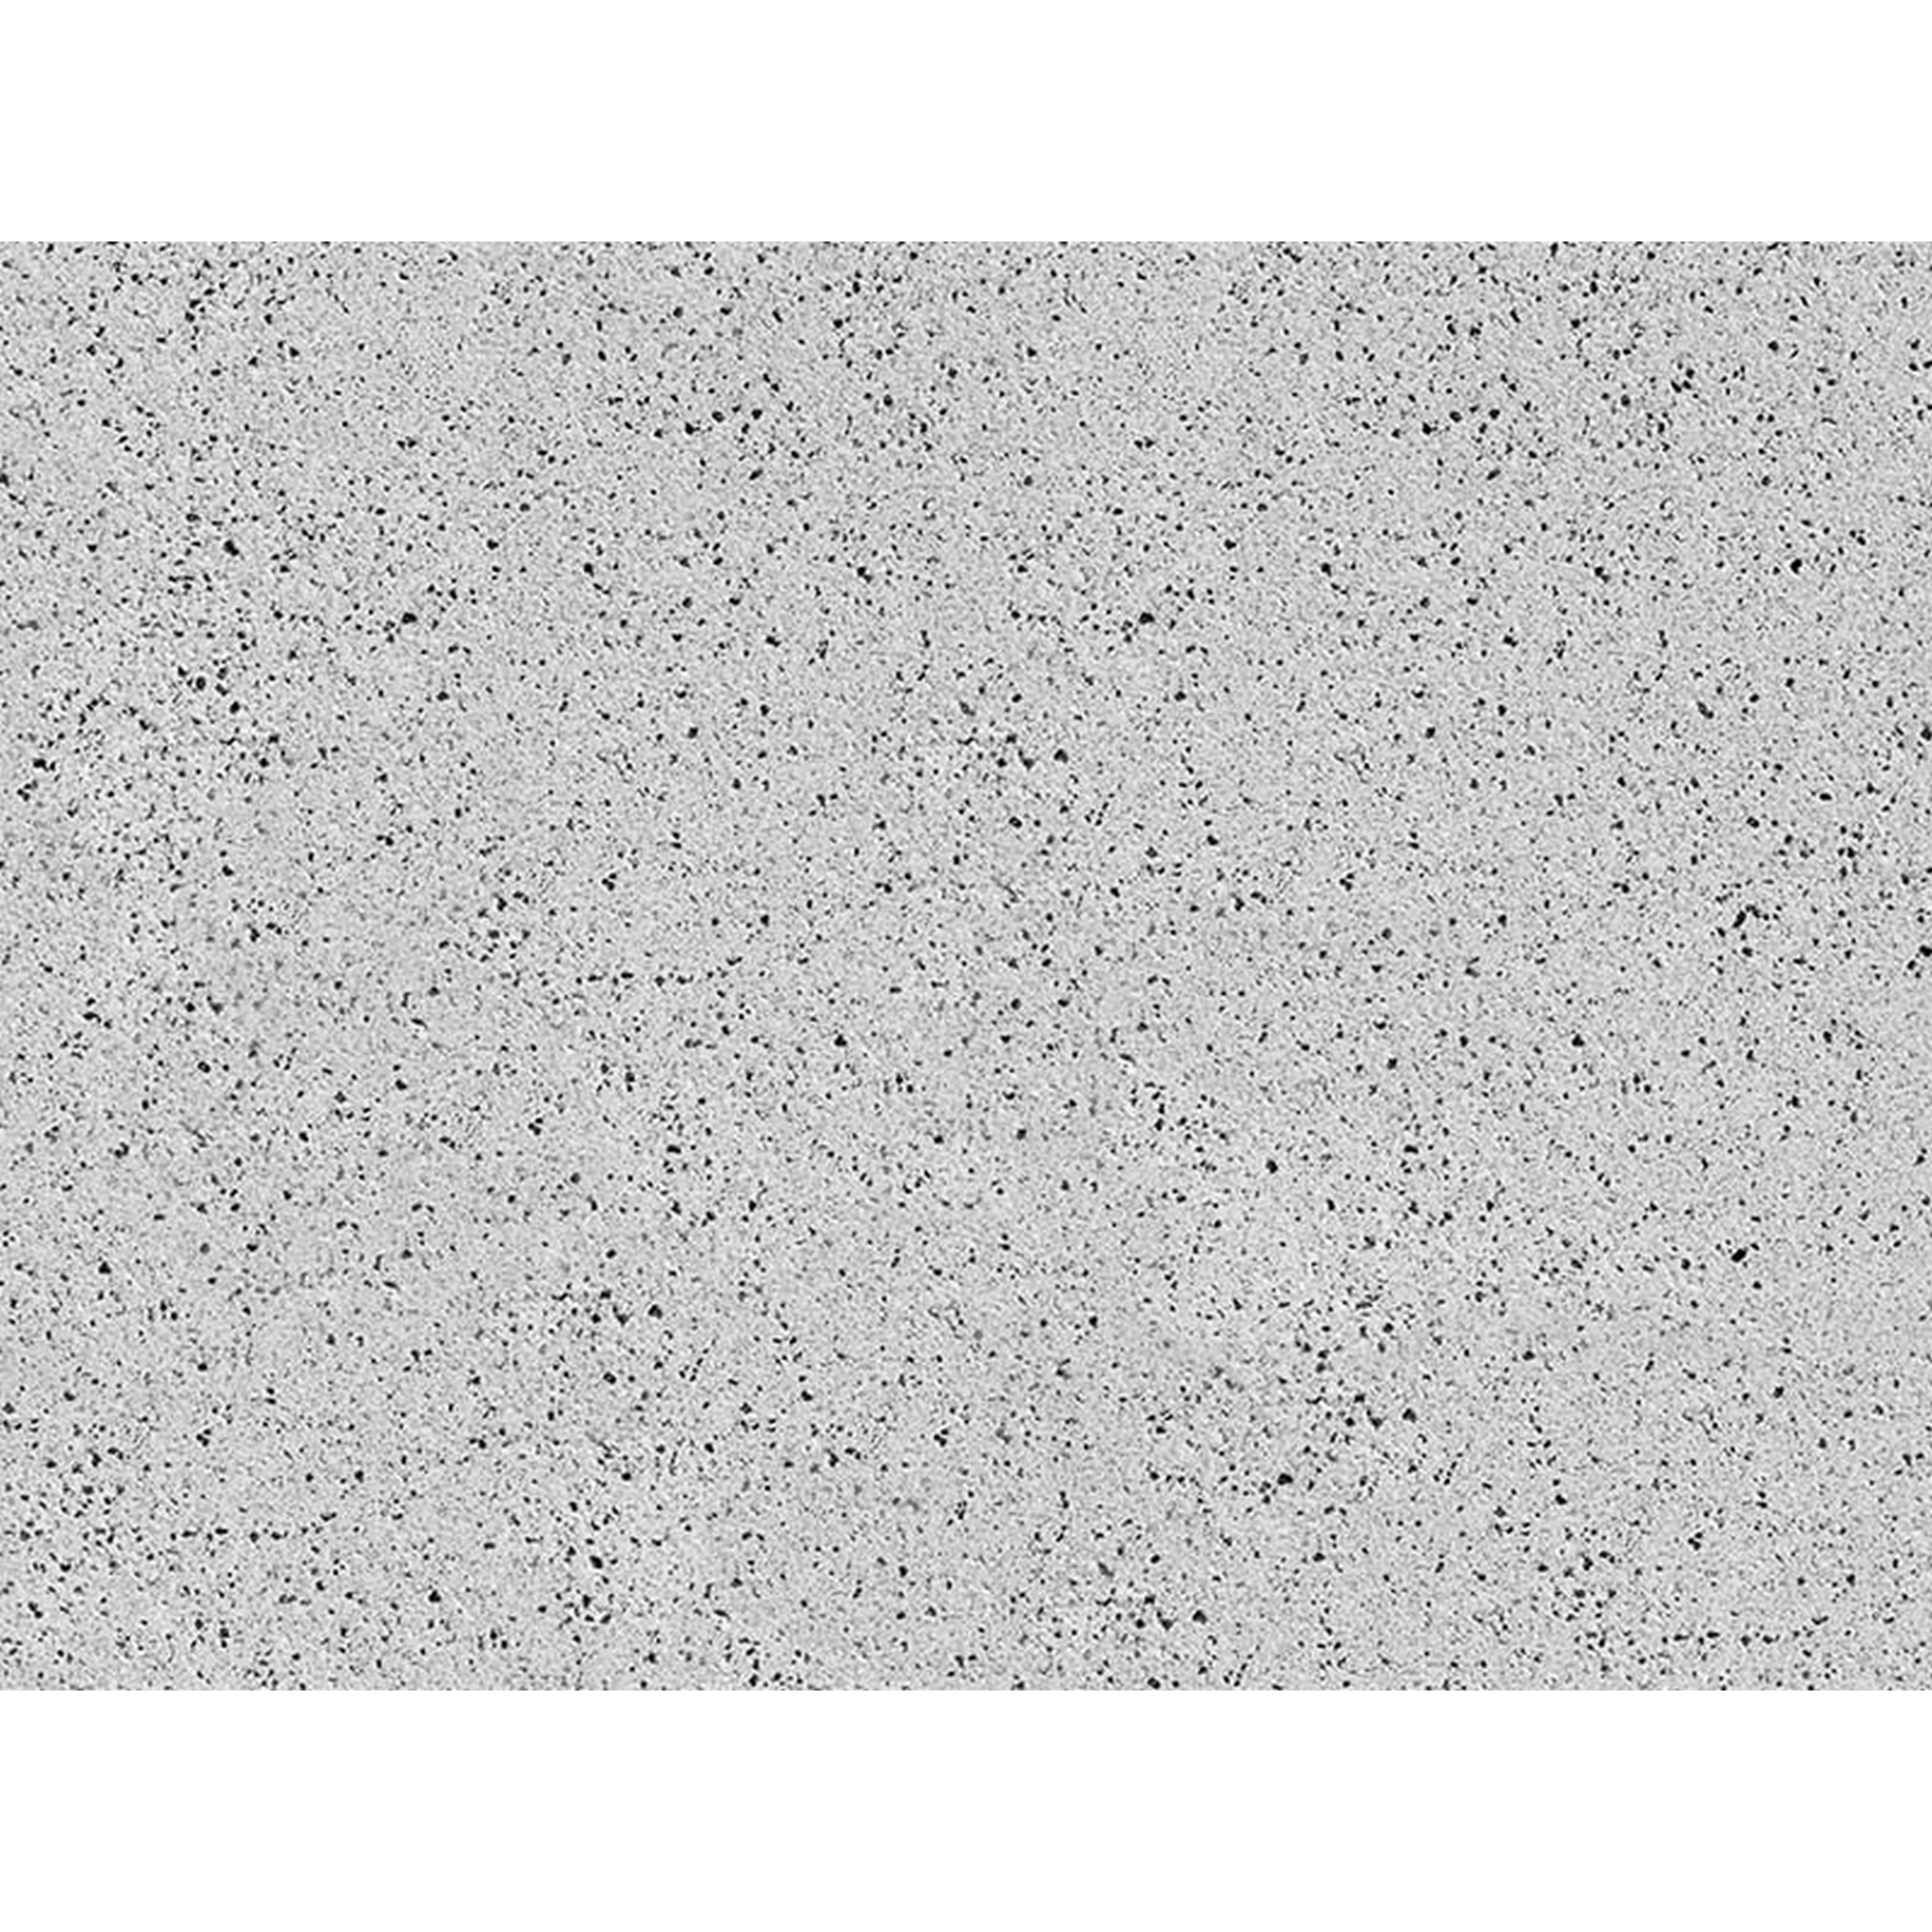 Terrassenplatte 'T-Court Classic' Beton hellgrau 60 x 40 x 4 cm + product picture